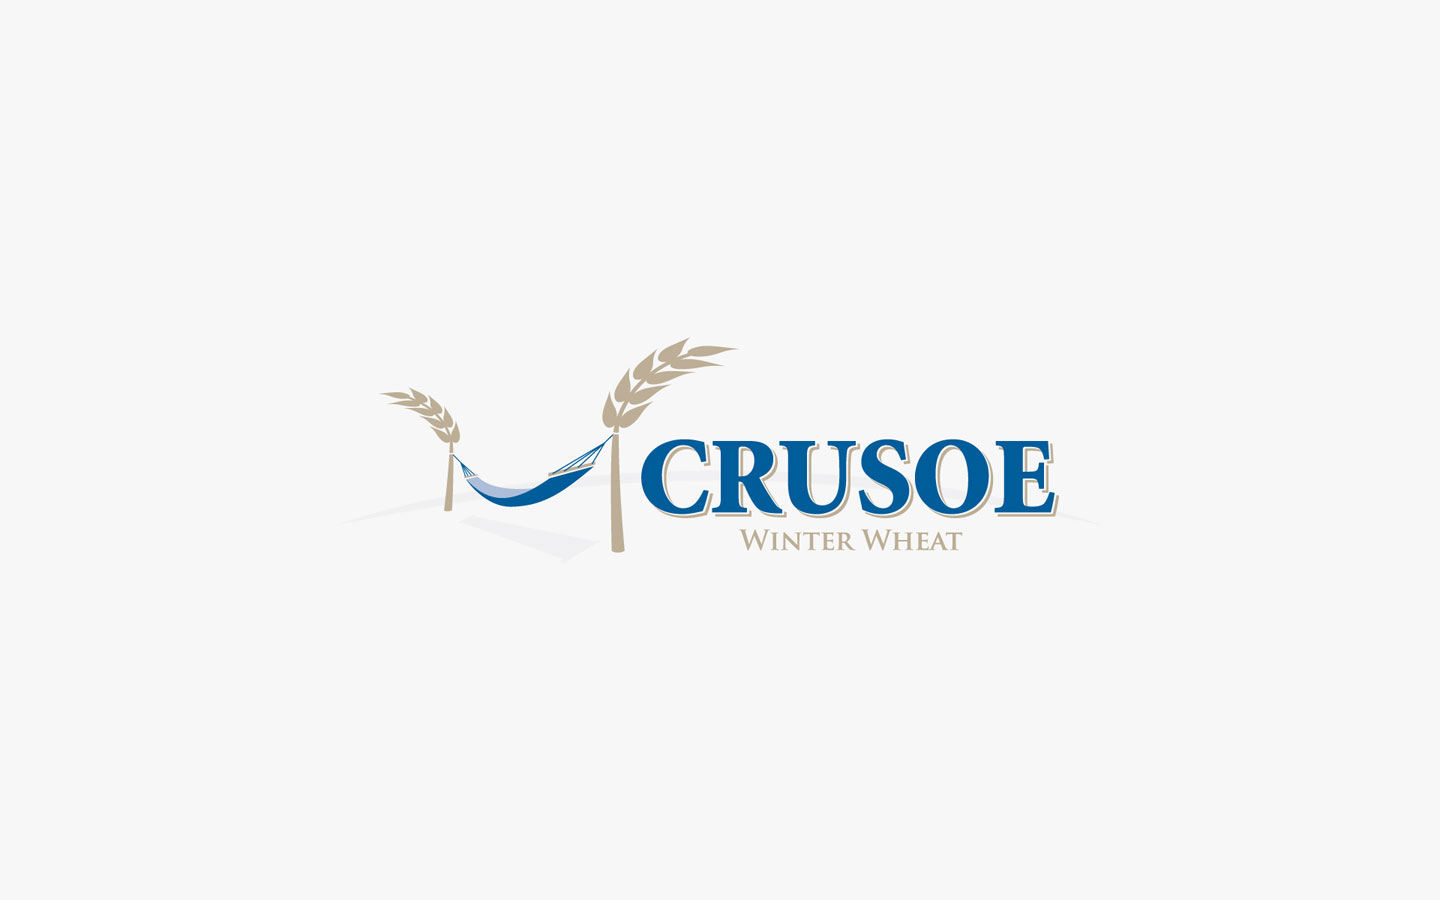 Crusoe for Lima Grain UK, Logo Design in Brand Colours